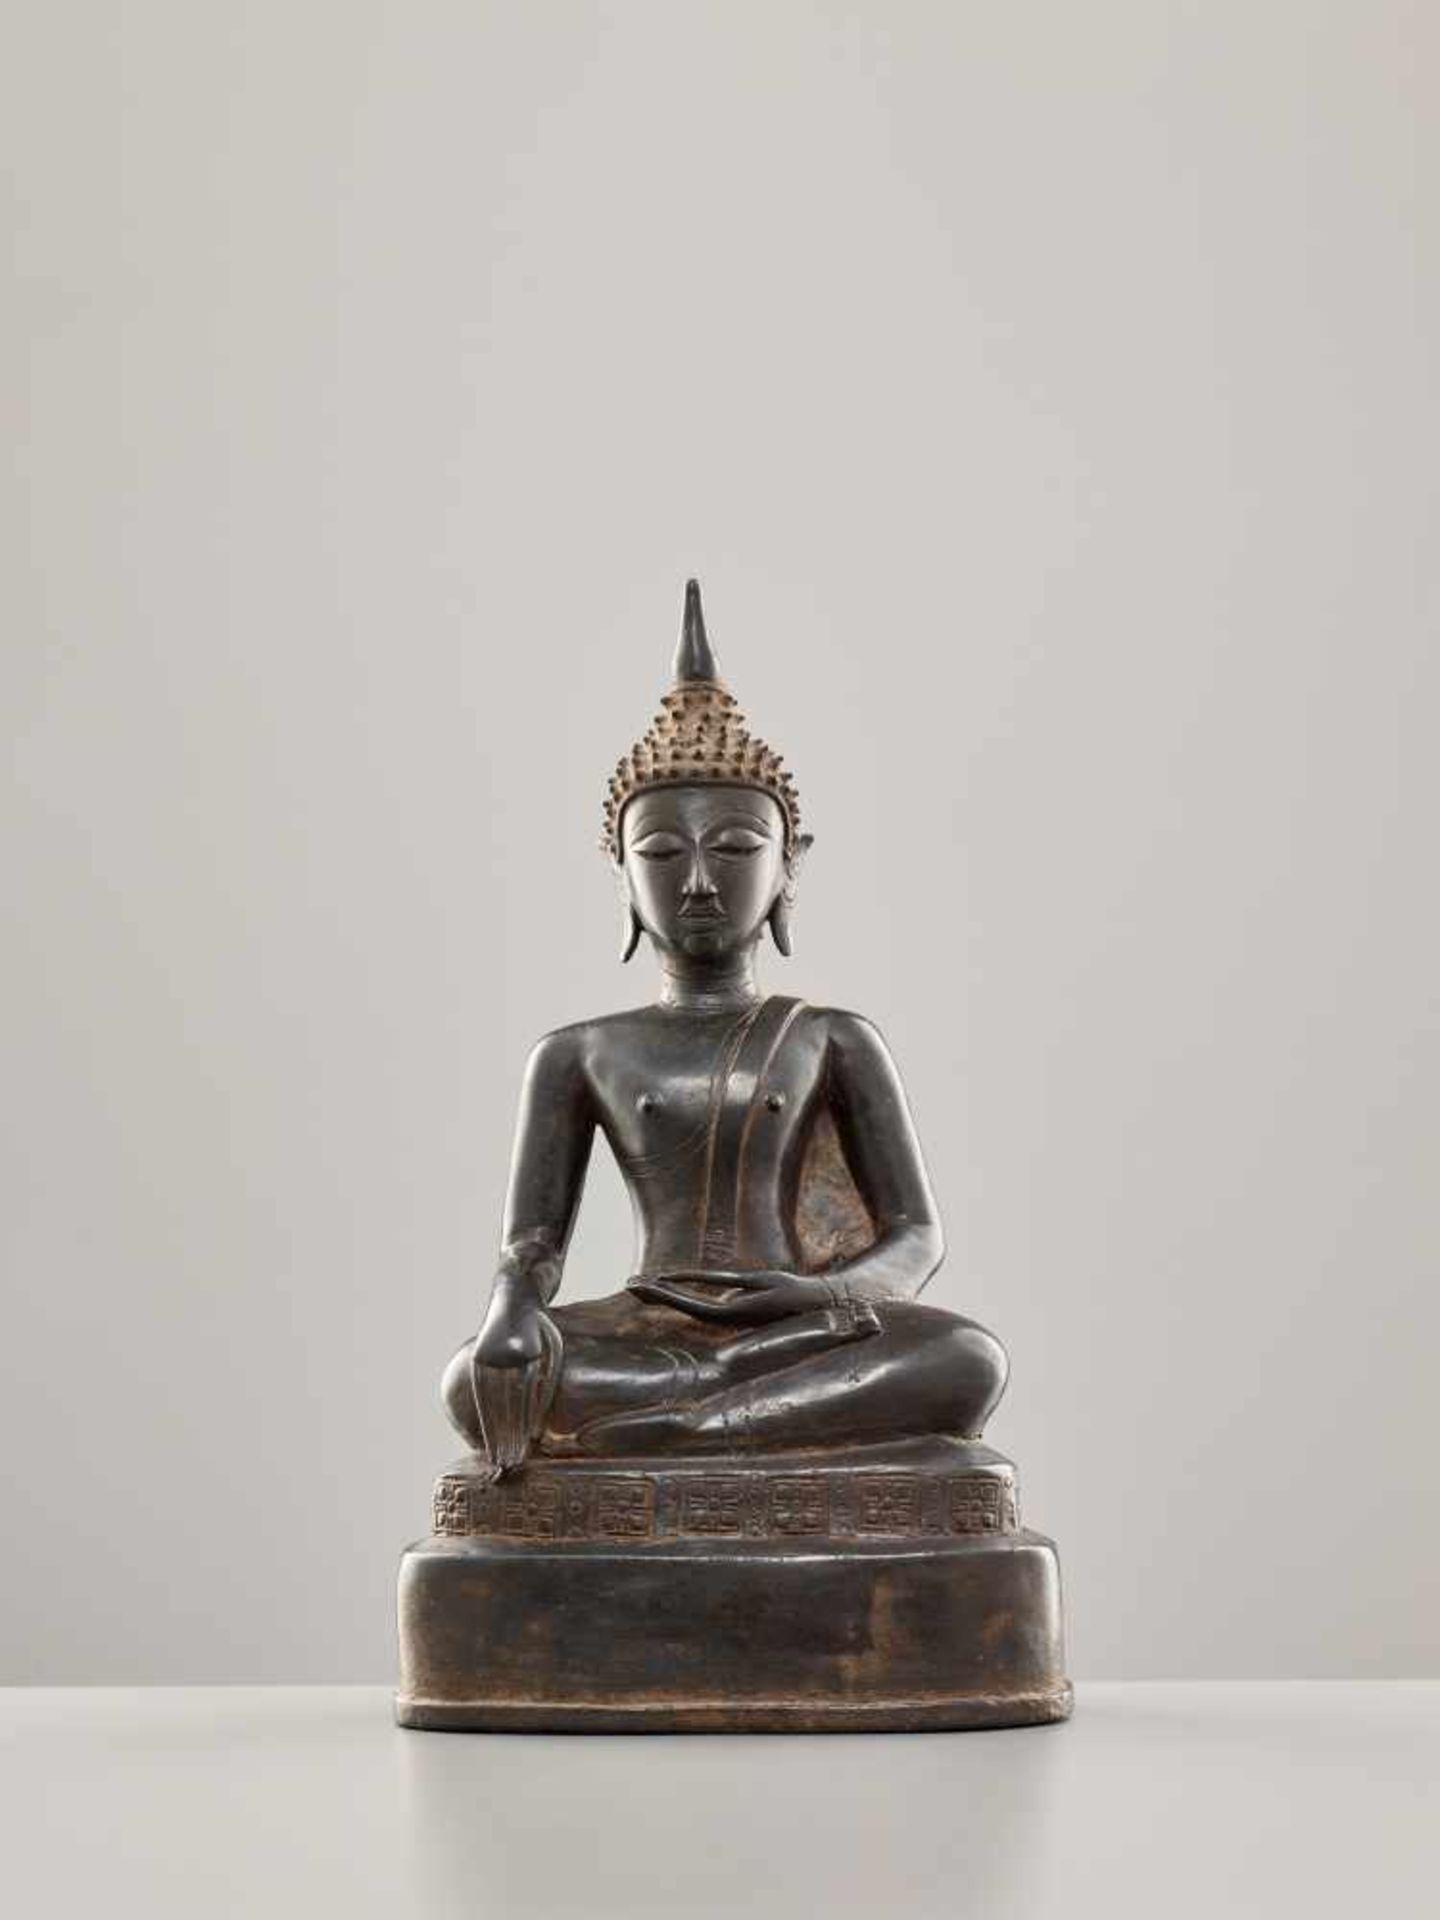 A FINE BRONZE FIGURE OF BUDDHA SHAKYAMUNI, LAOS / NORTHERN THAILAND, 17th – 18th CENTURYMassively